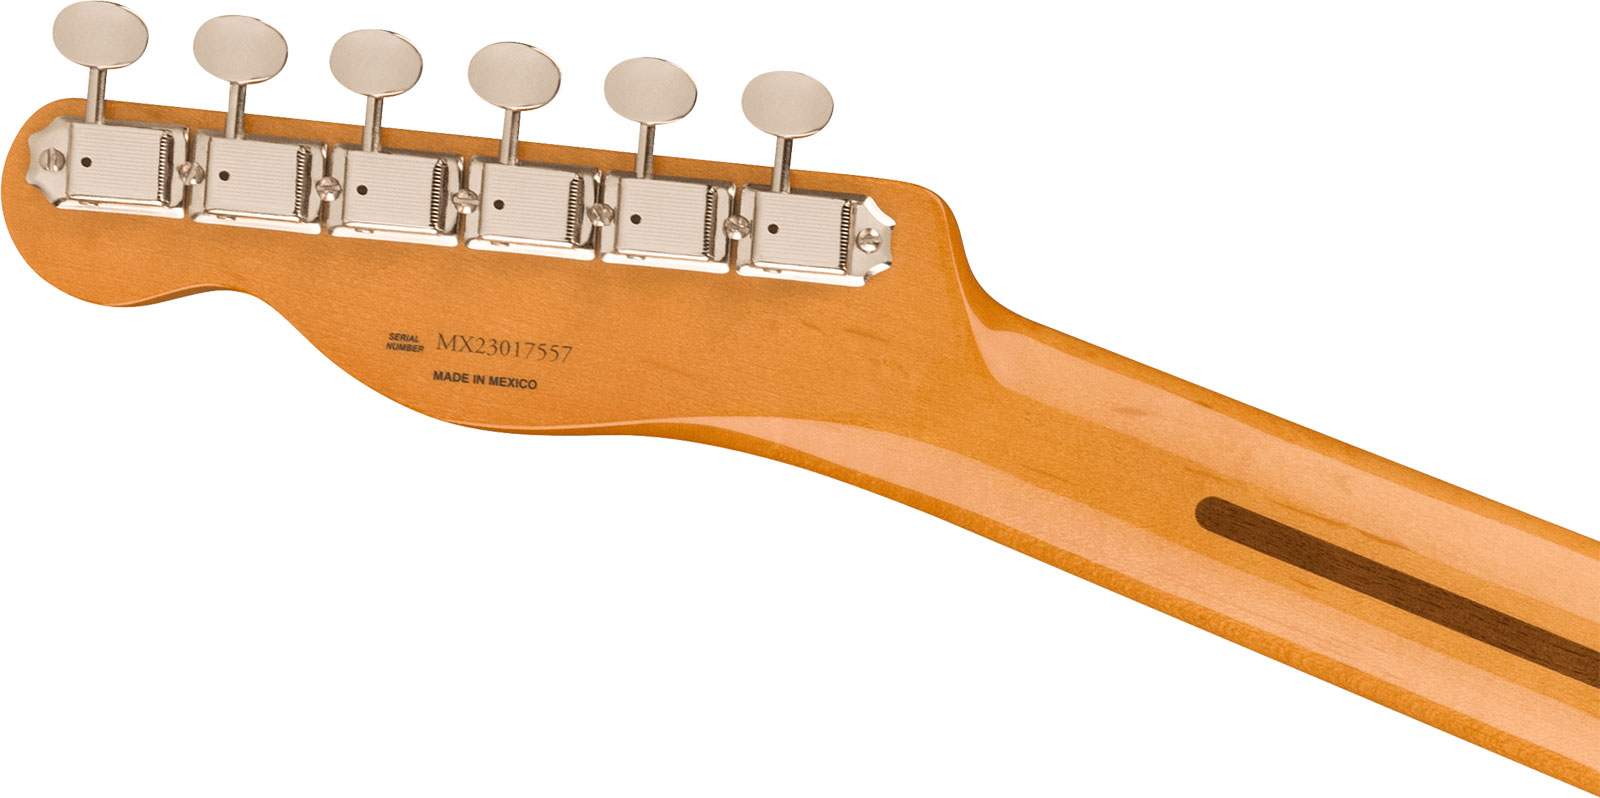 Fender Tele Nocaster 50s Vintera 2 Mex 2s Ht Mn - Blackguard Blonde - Tel shape electric guitar - Variation 3